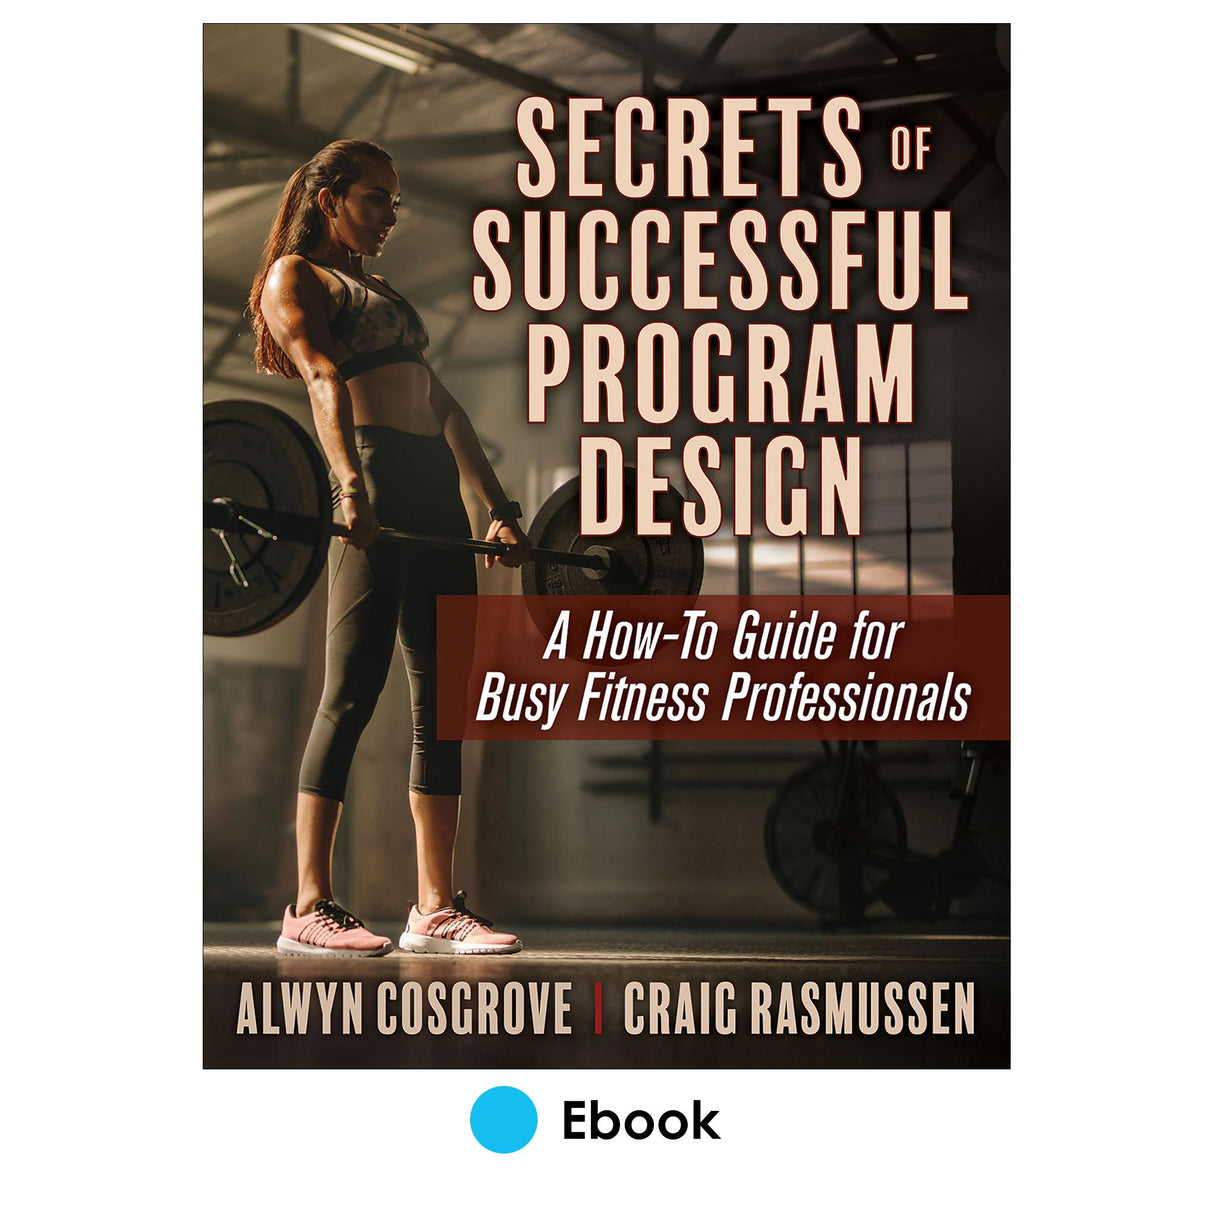 Secrets of Successful Program Design epub